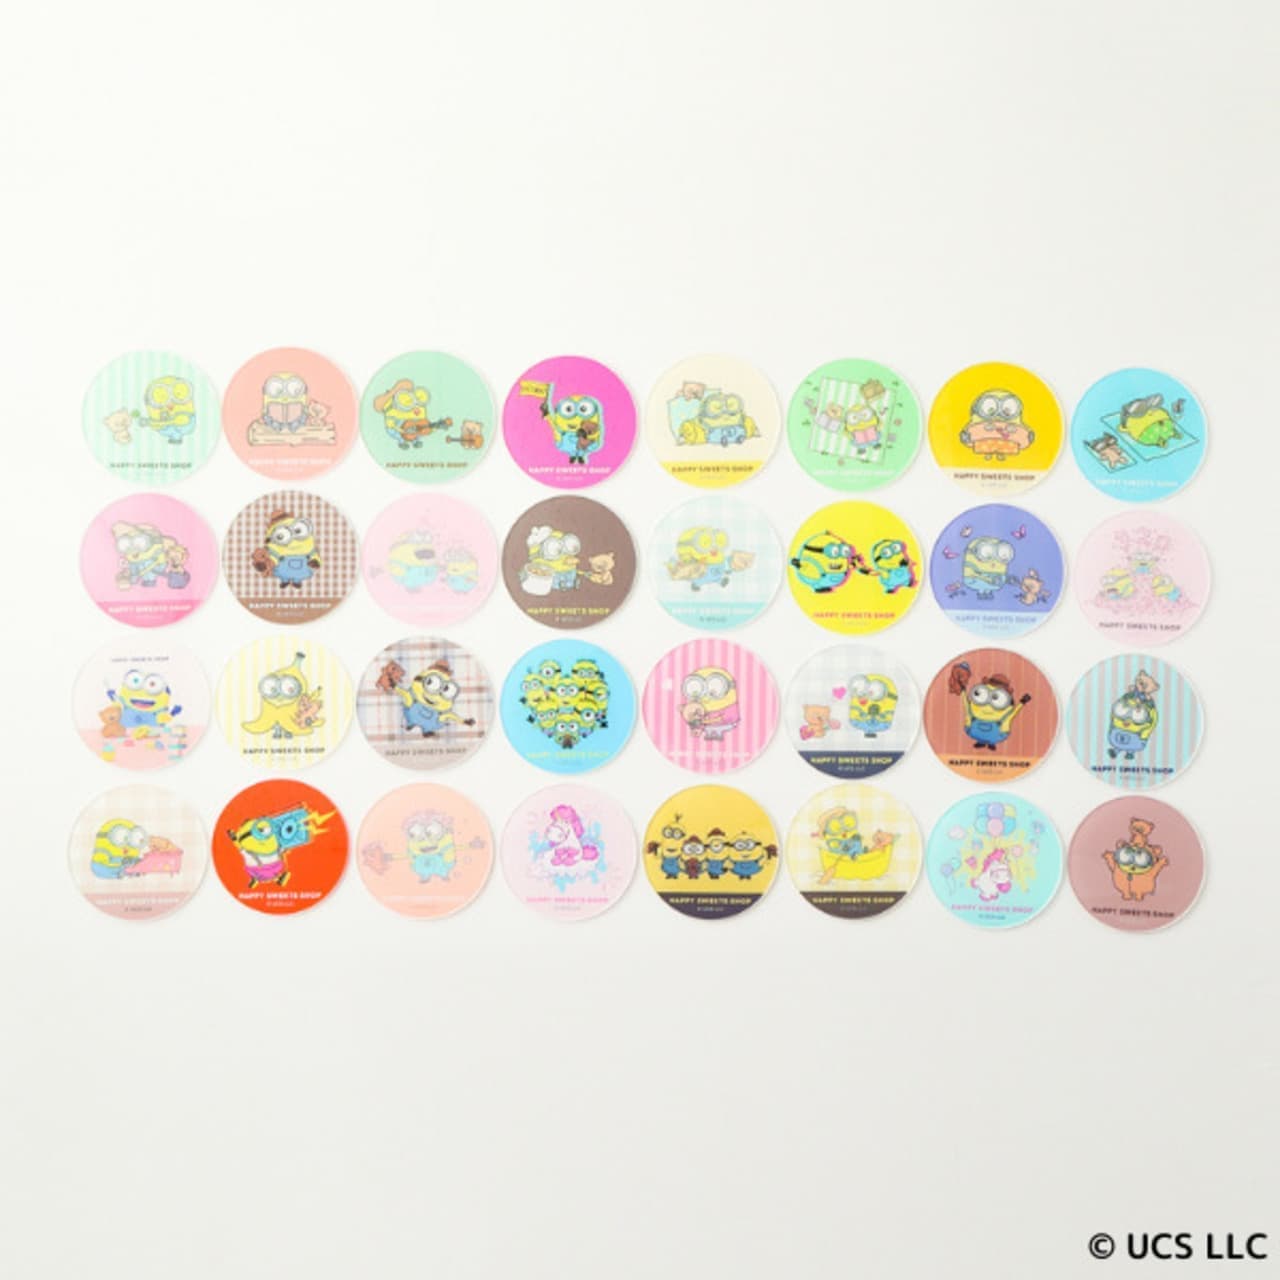 Minion Happy Sweets Shop "Original Acrylic Coaster